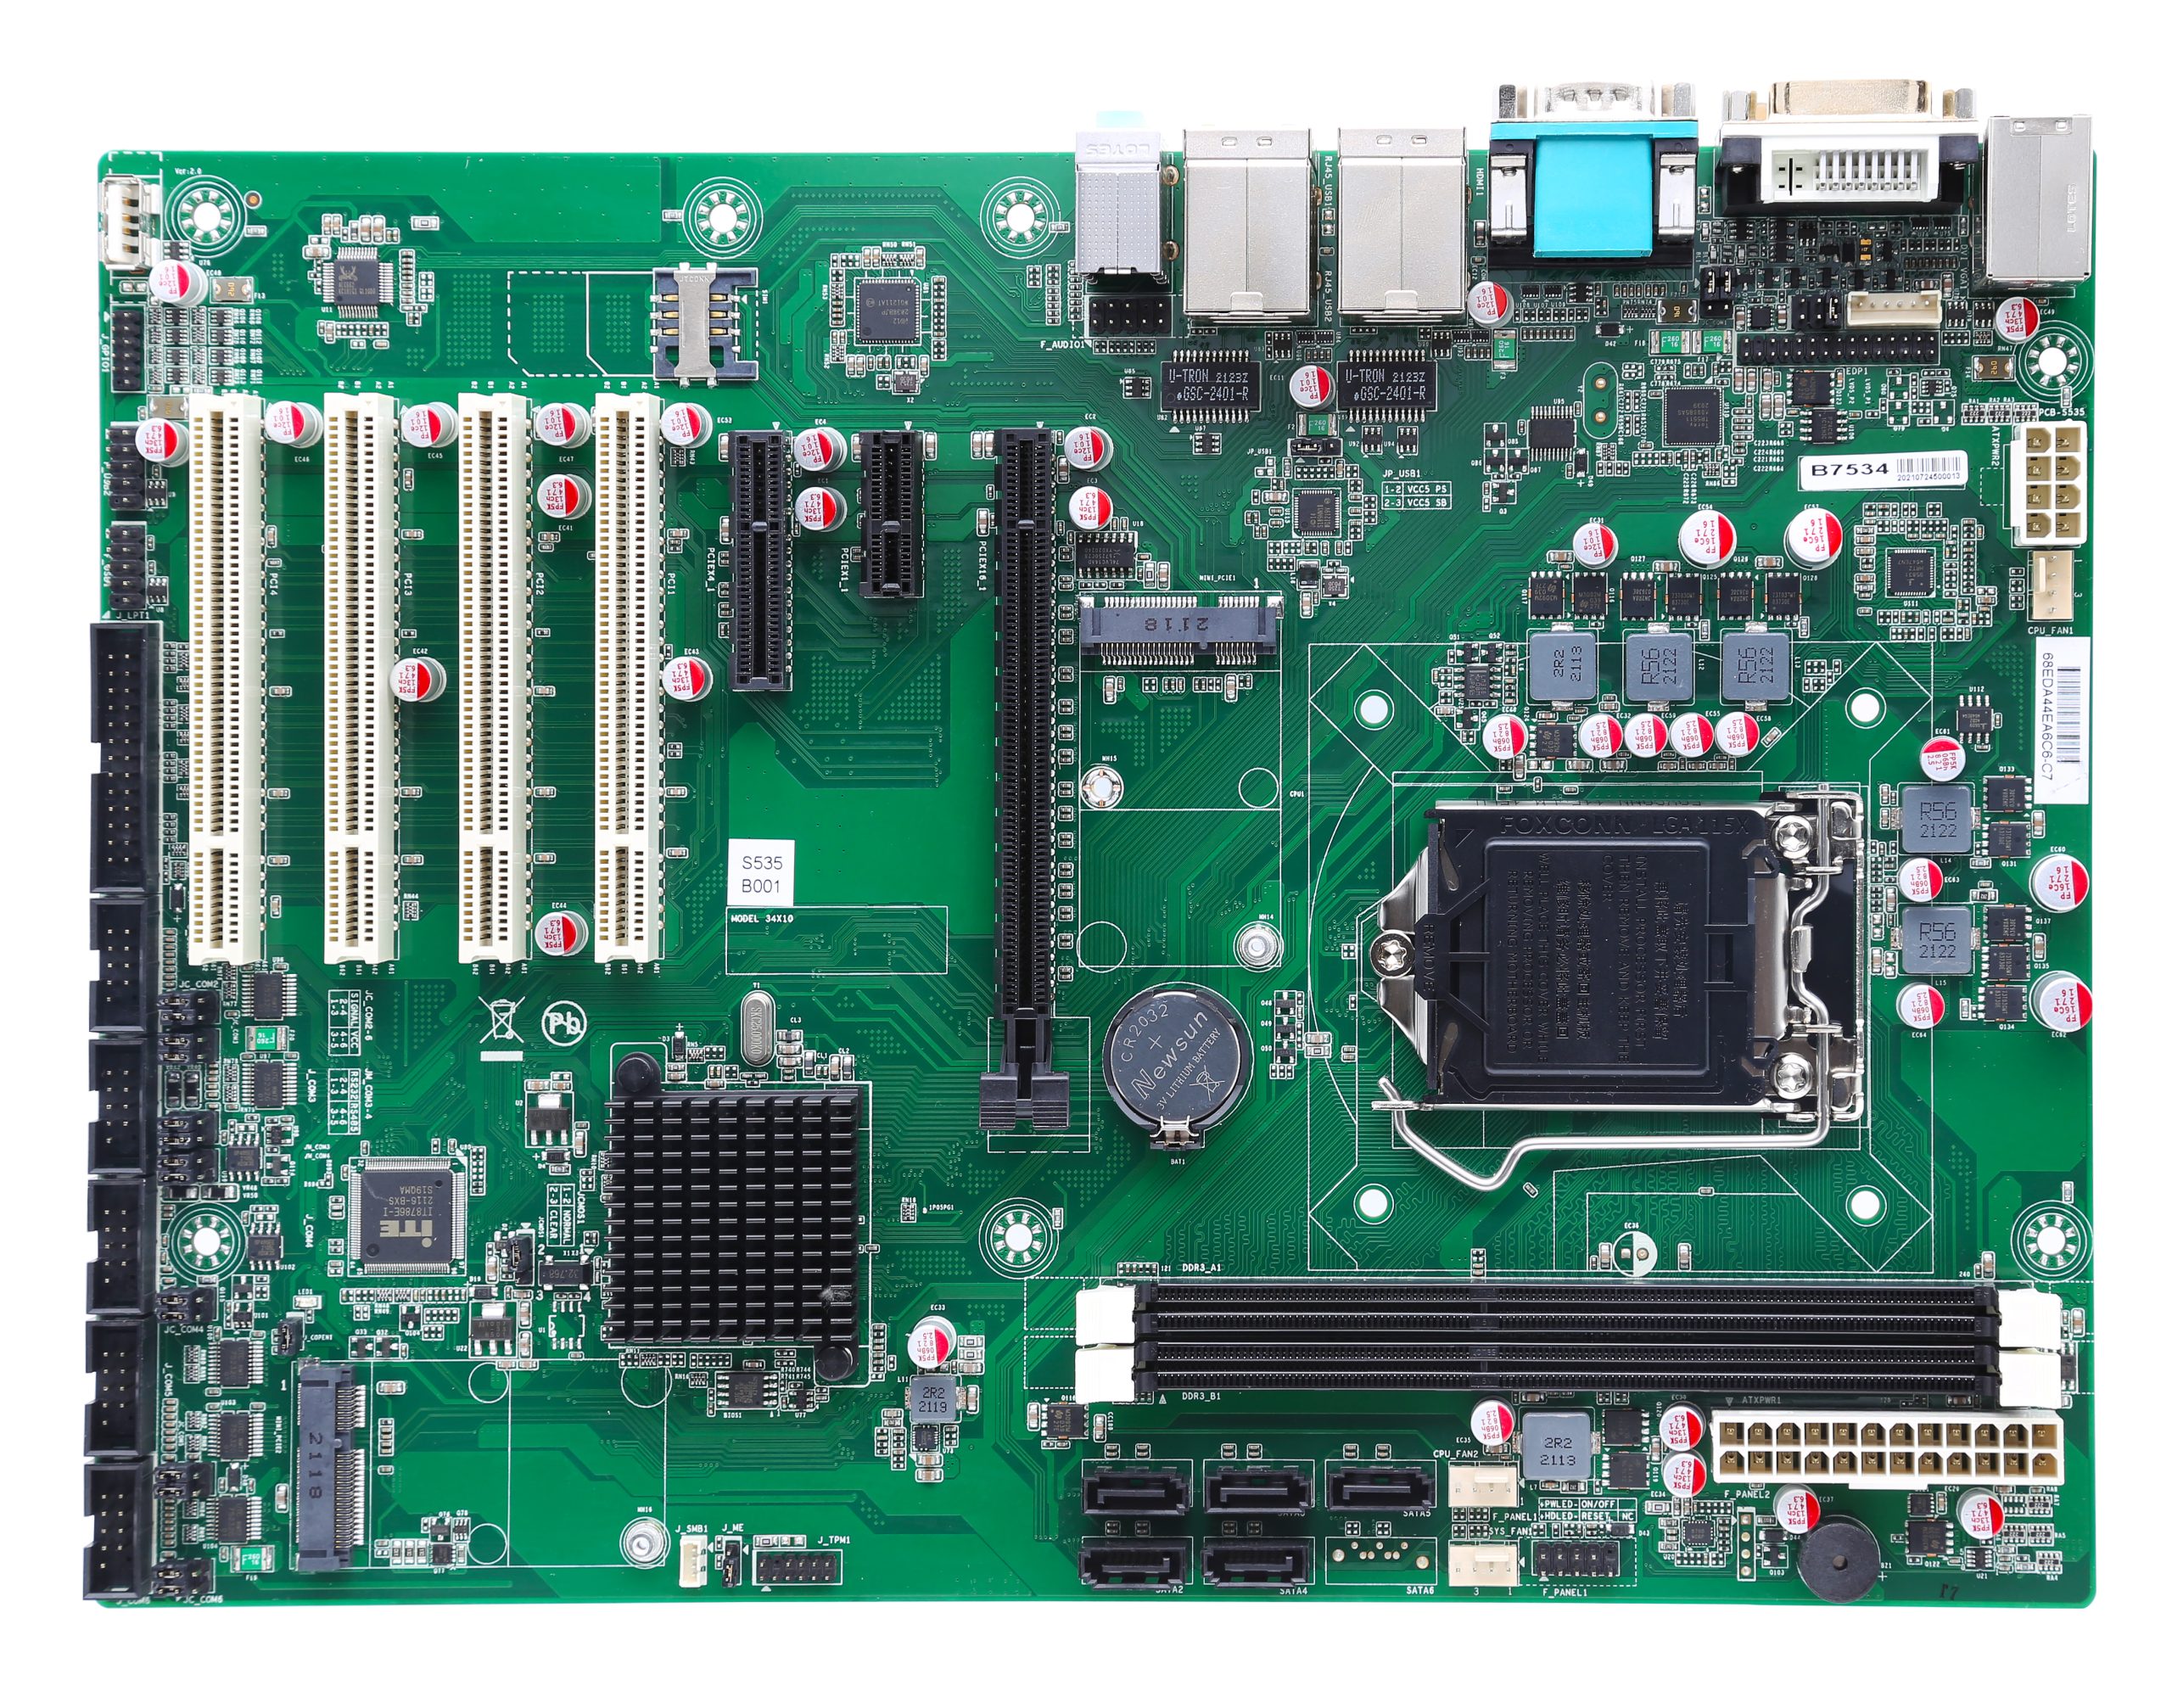 DMB-AB75 Industrial Motherboard with Intel® 2nd/3rd Gen Core™ i3/i5/i7 Processor, B75 Chipset, 3x PCIe, 4x PCI, 6x COM, 11x USB, 2x LAN